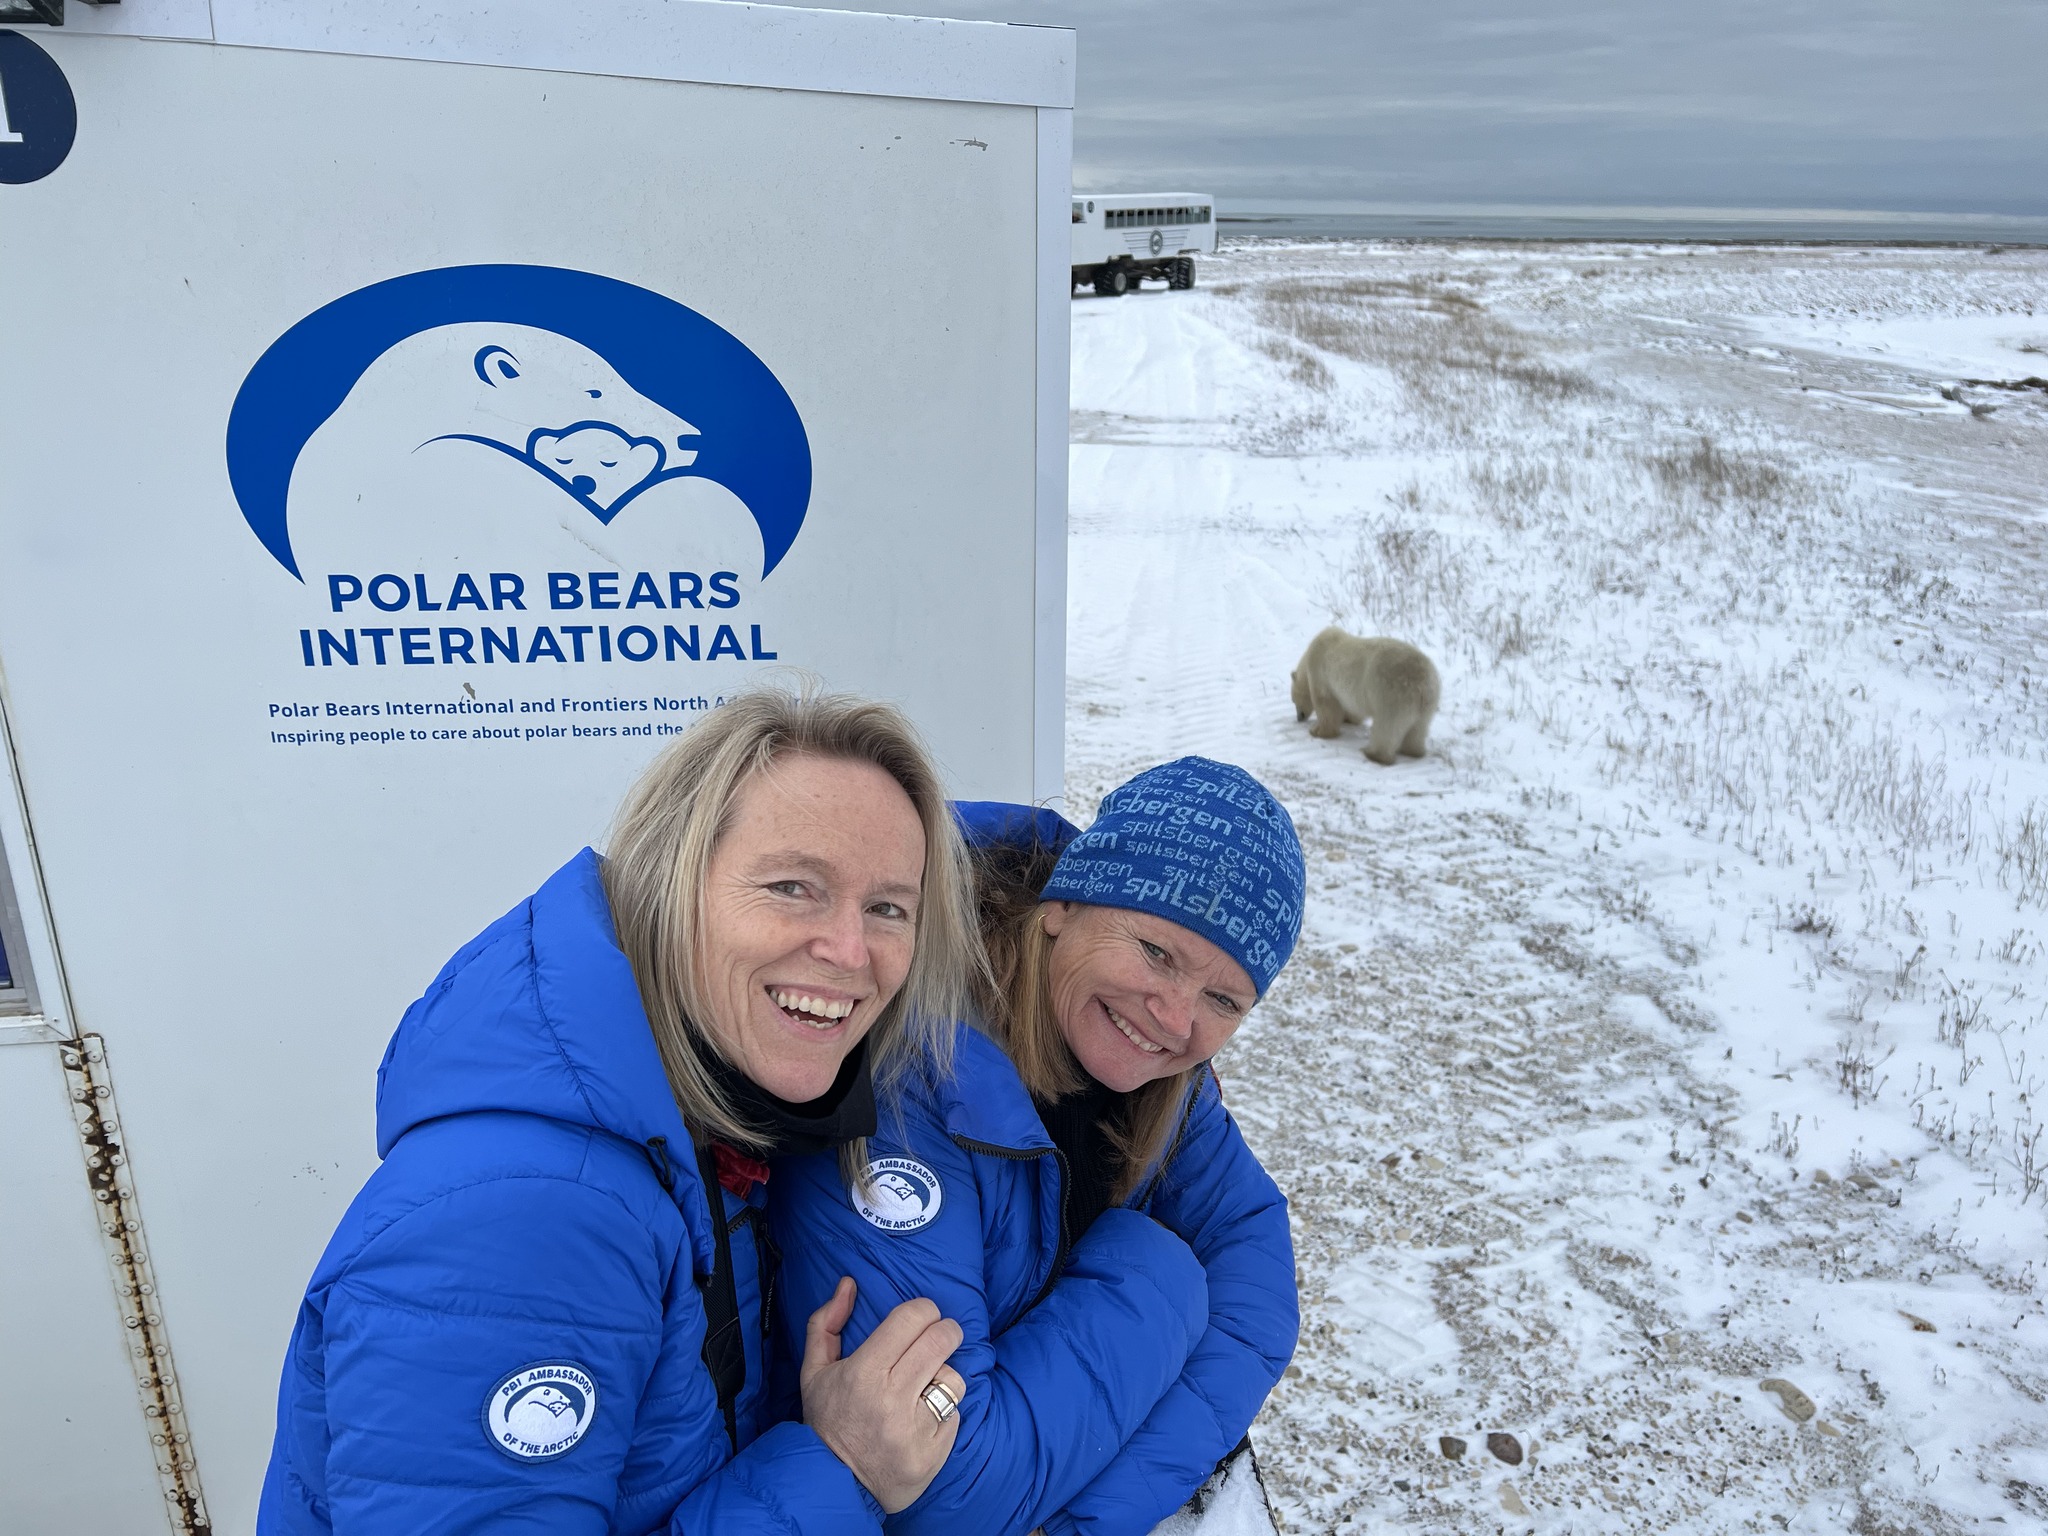 Partnership with Polar Bears International